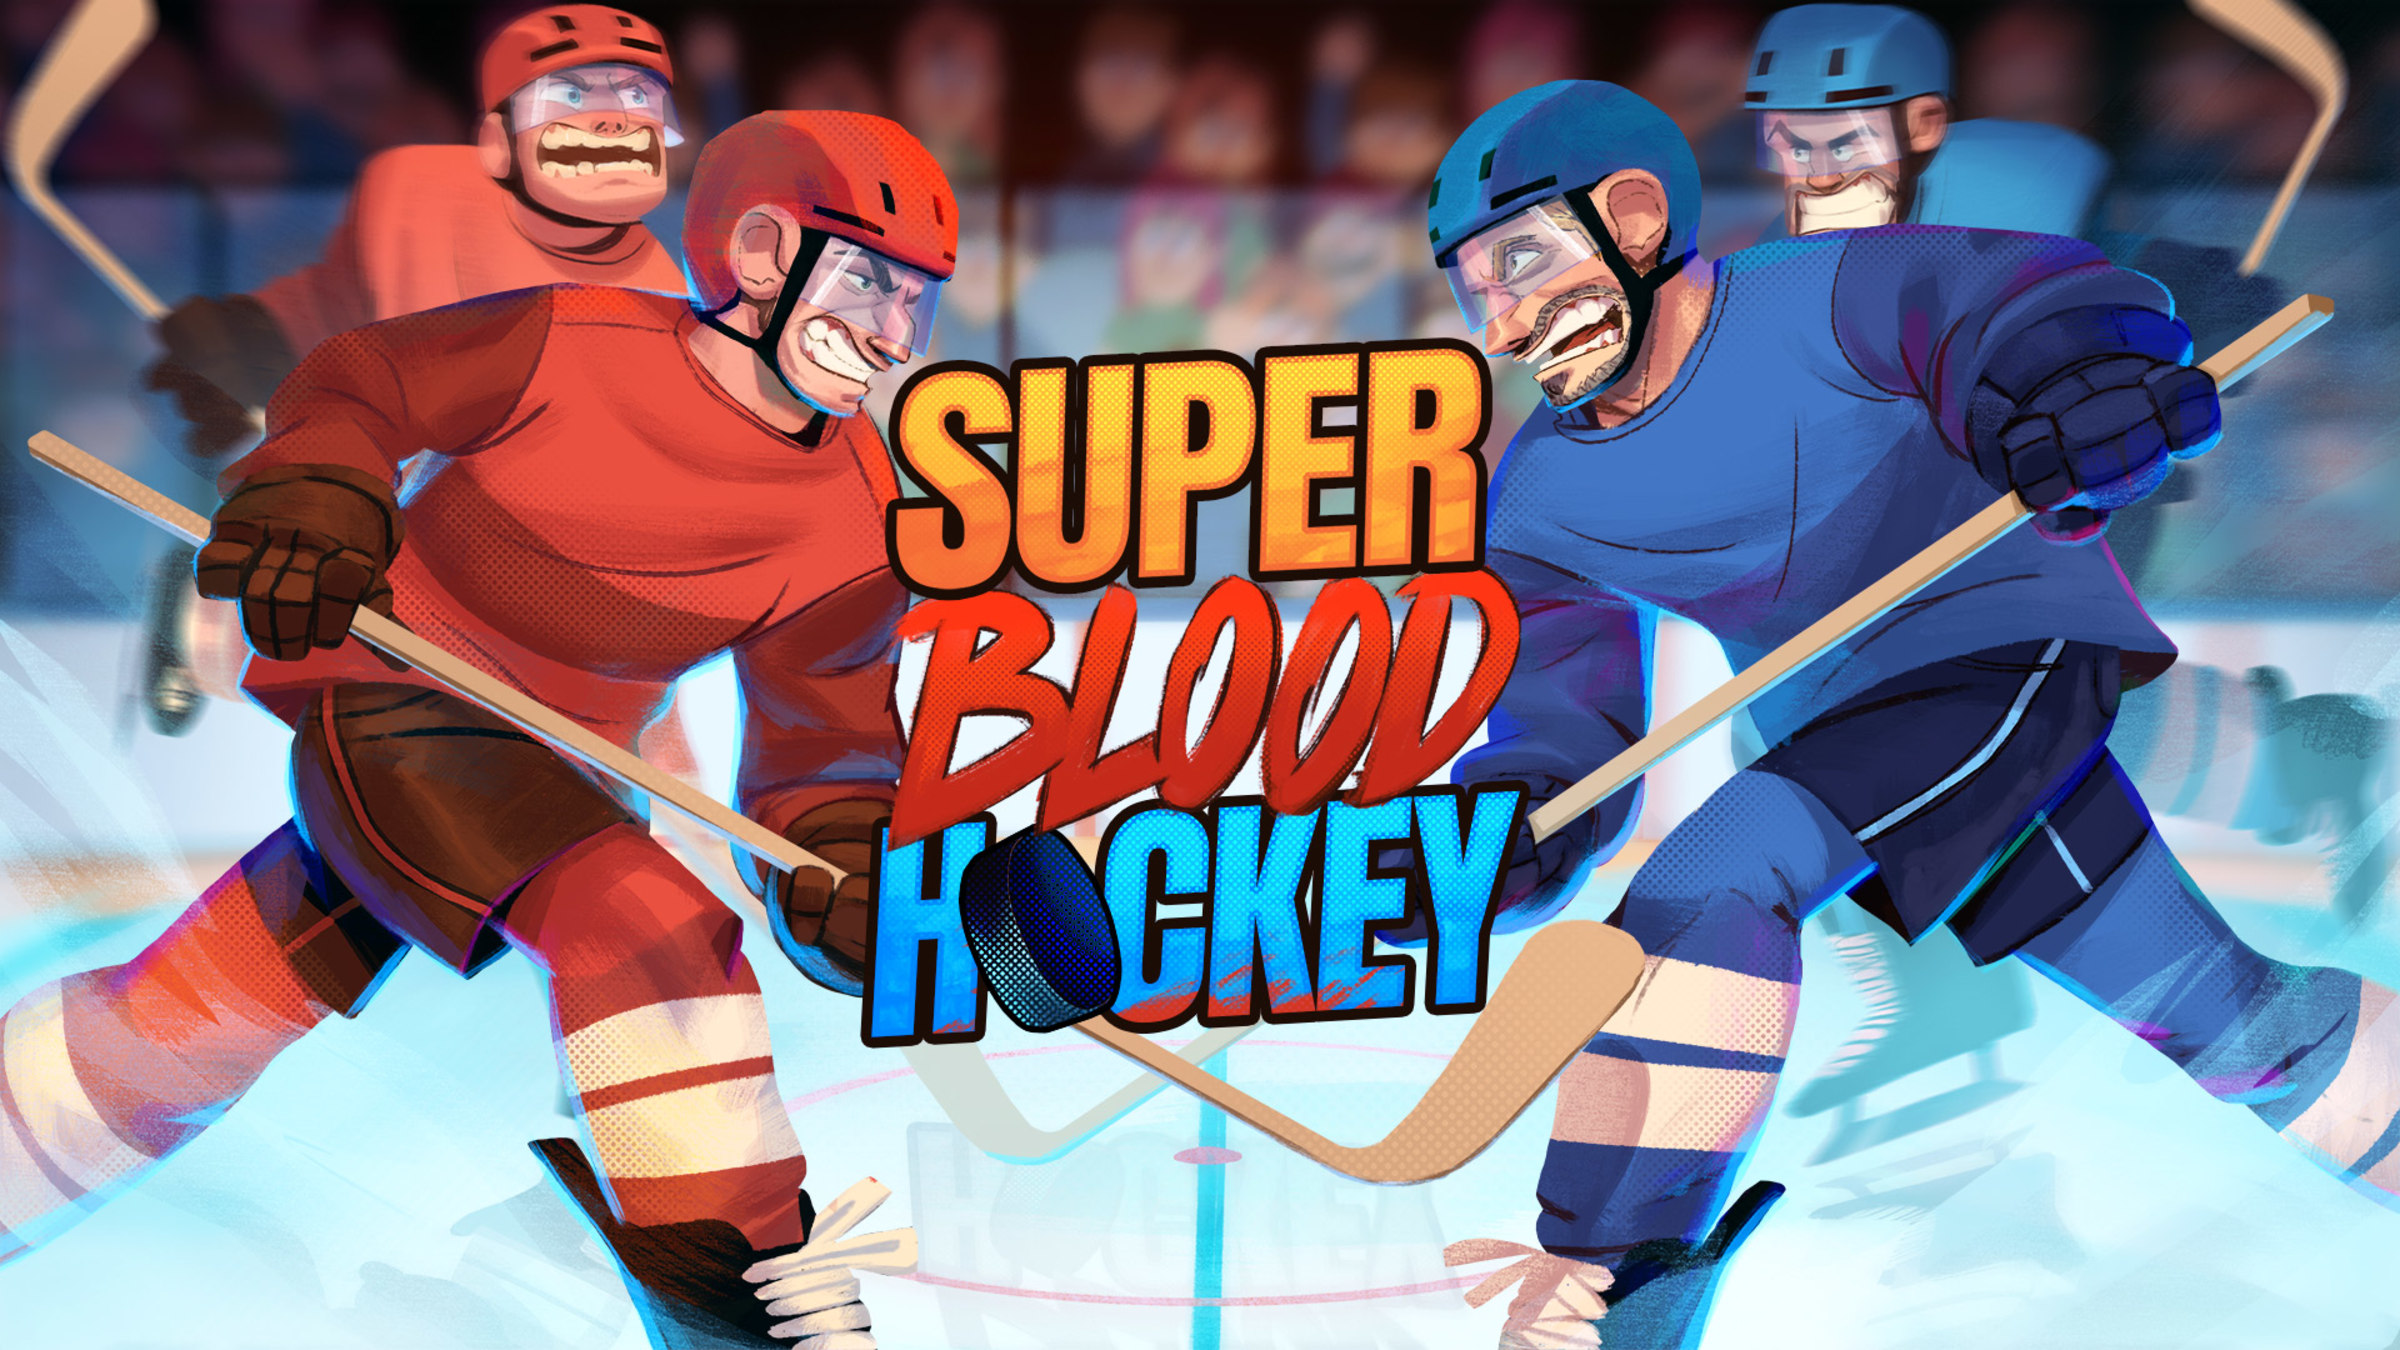 stick hockey game online